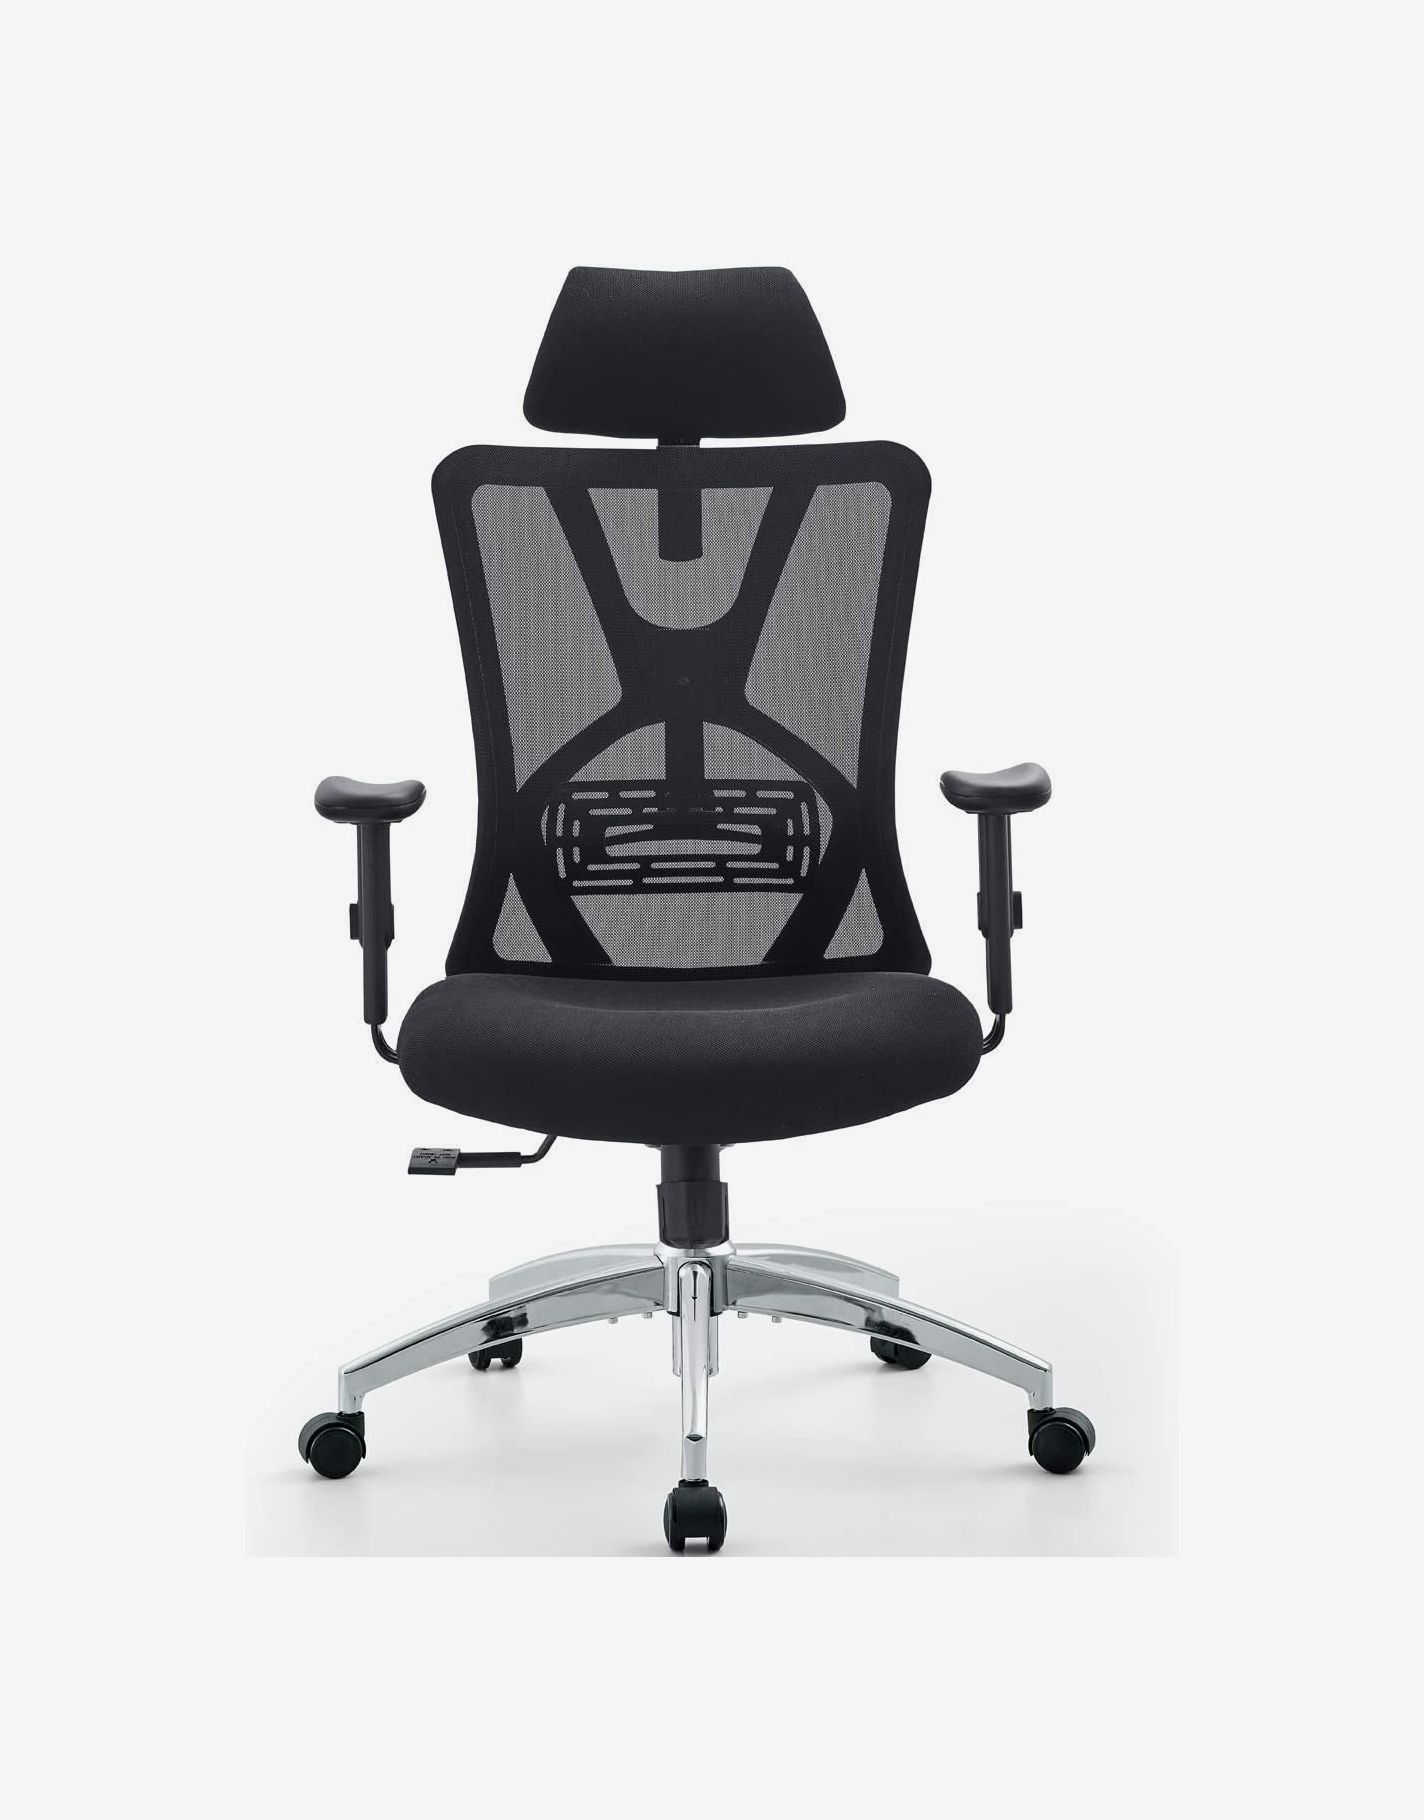 iKayaa 4 Set OF Adjustable Home Office Desk Chair 360°Swivel Task Chair US I4B1 